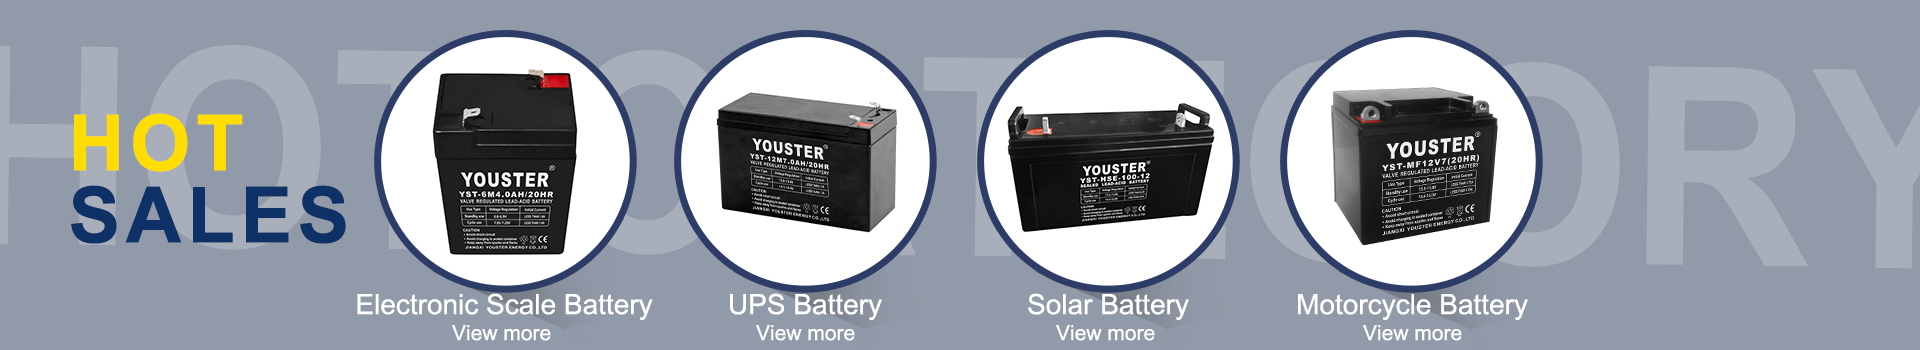 Batteria per manutenzione della batteria di vendita di vendita a caldo Batteria UPS gratuita 12v9ah batterie AGM